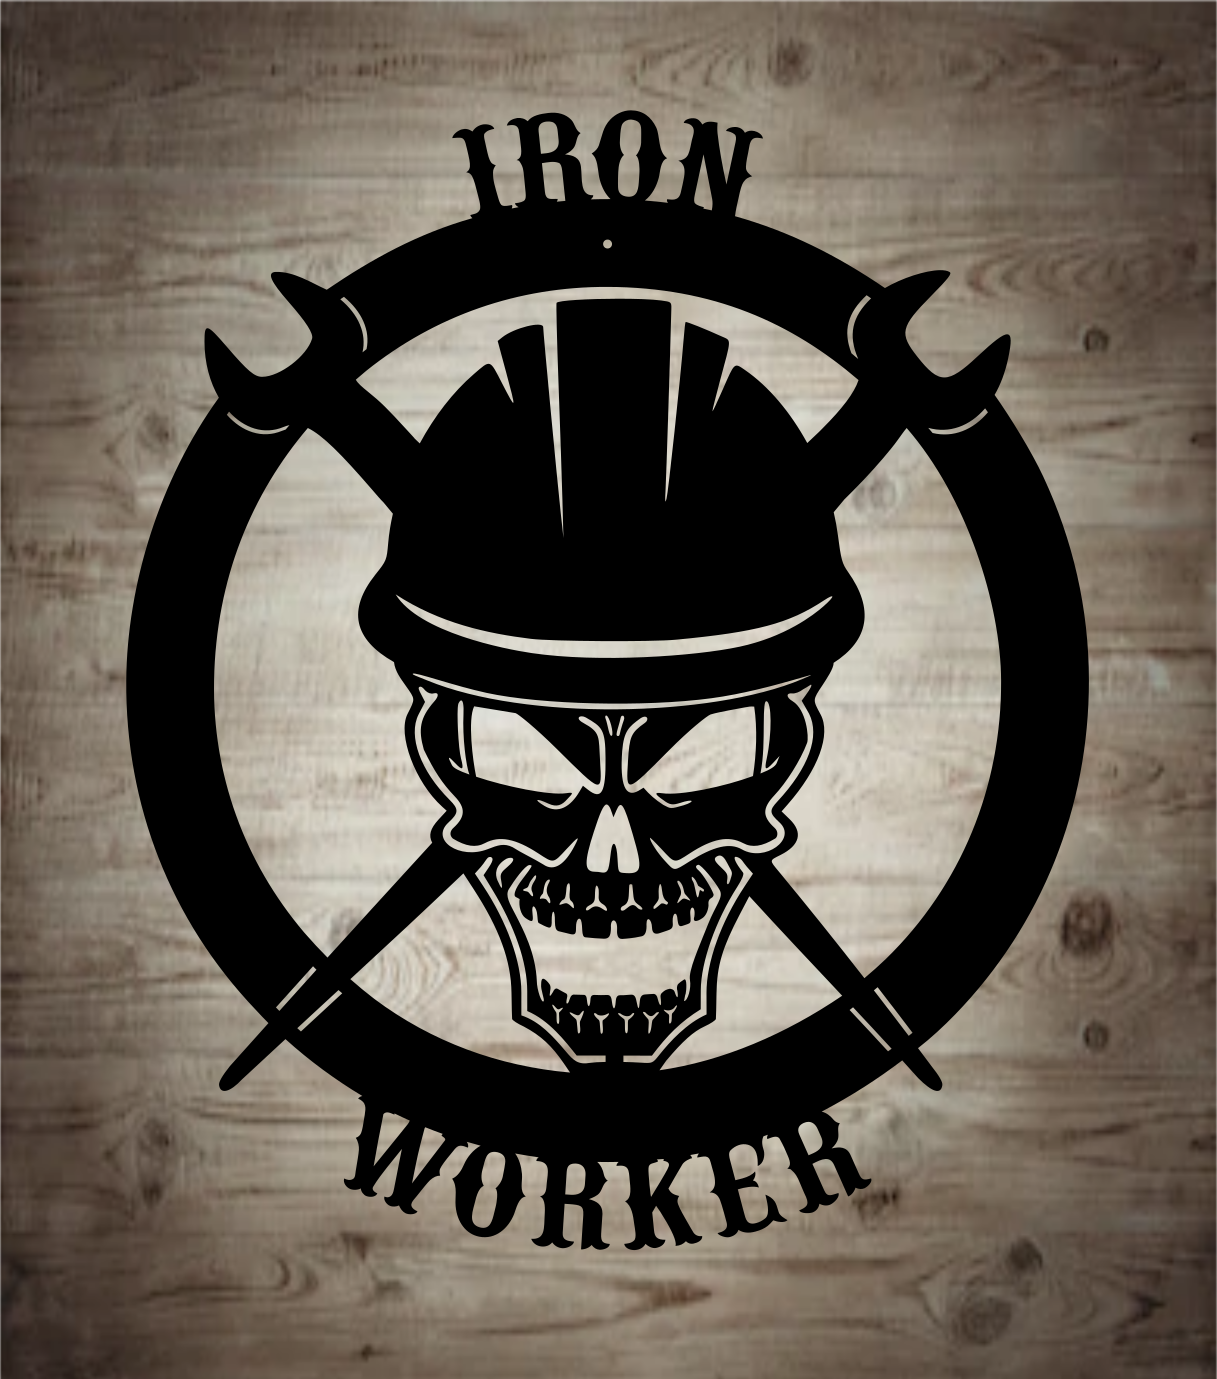 iron worker skull metal sign